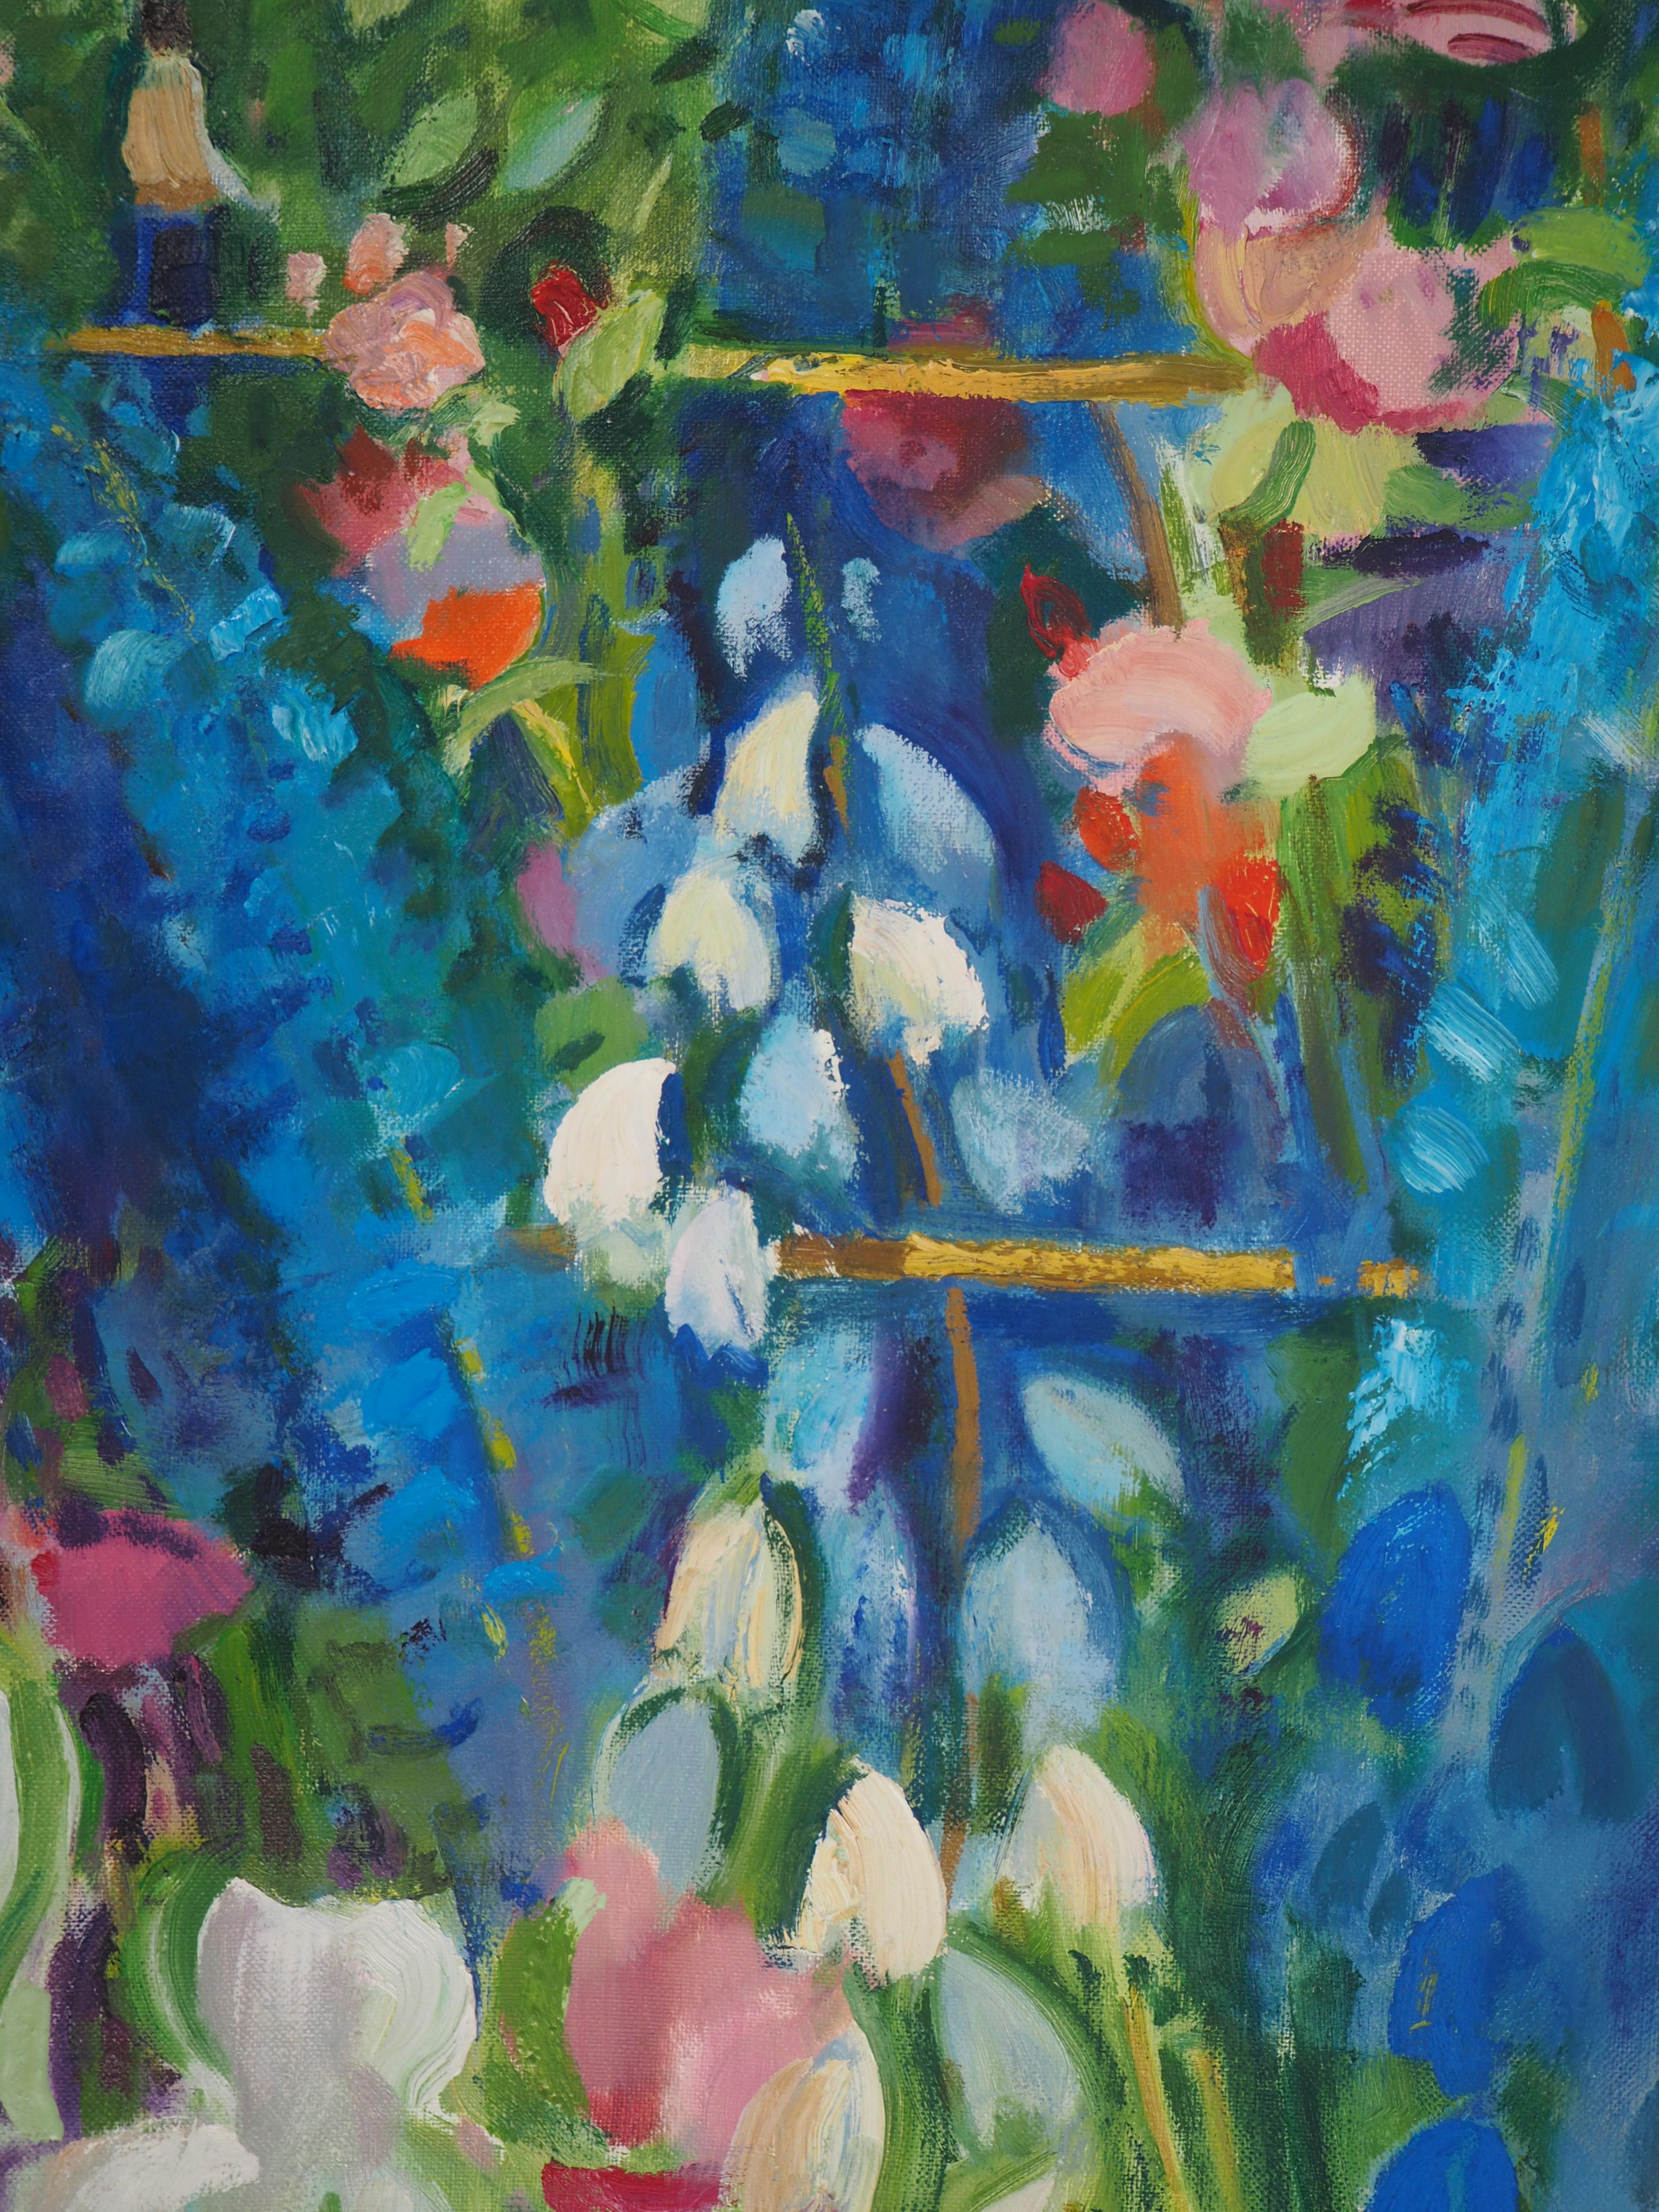 Garden : White Irises and Delphiniums - Original Oil Painting, Handsigned 1